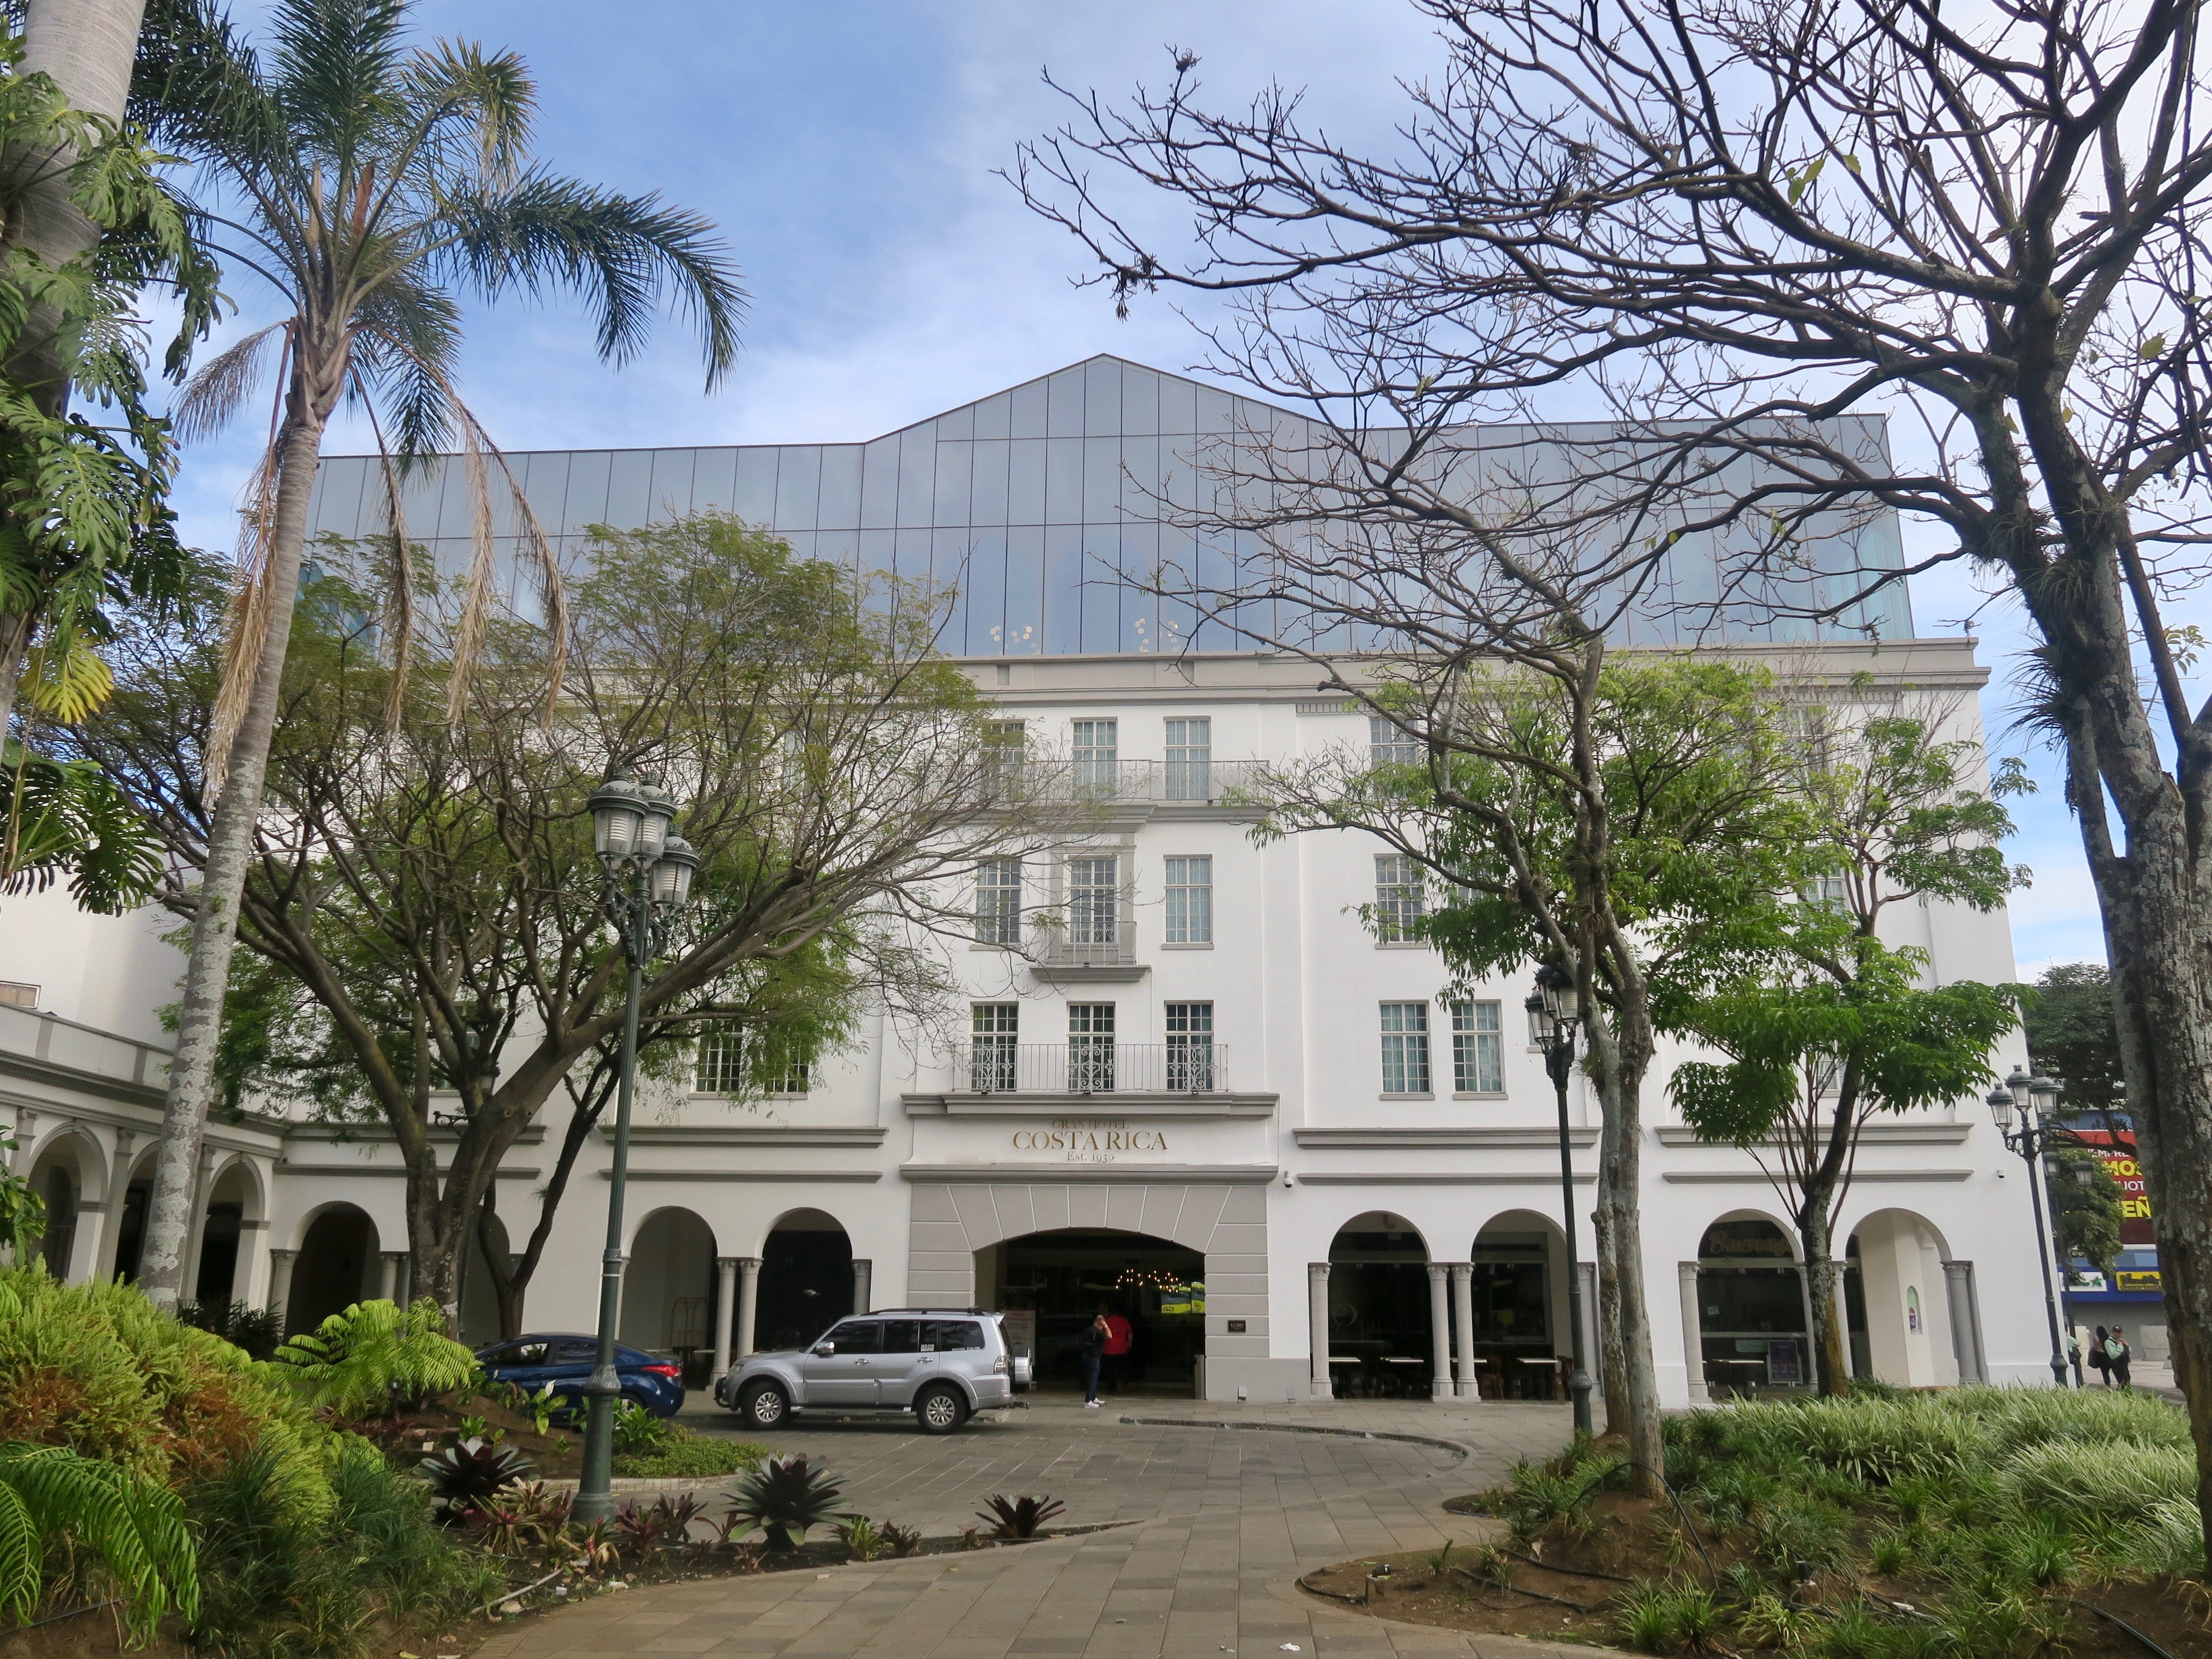 Gran Costa Rica Hotel, San Jose